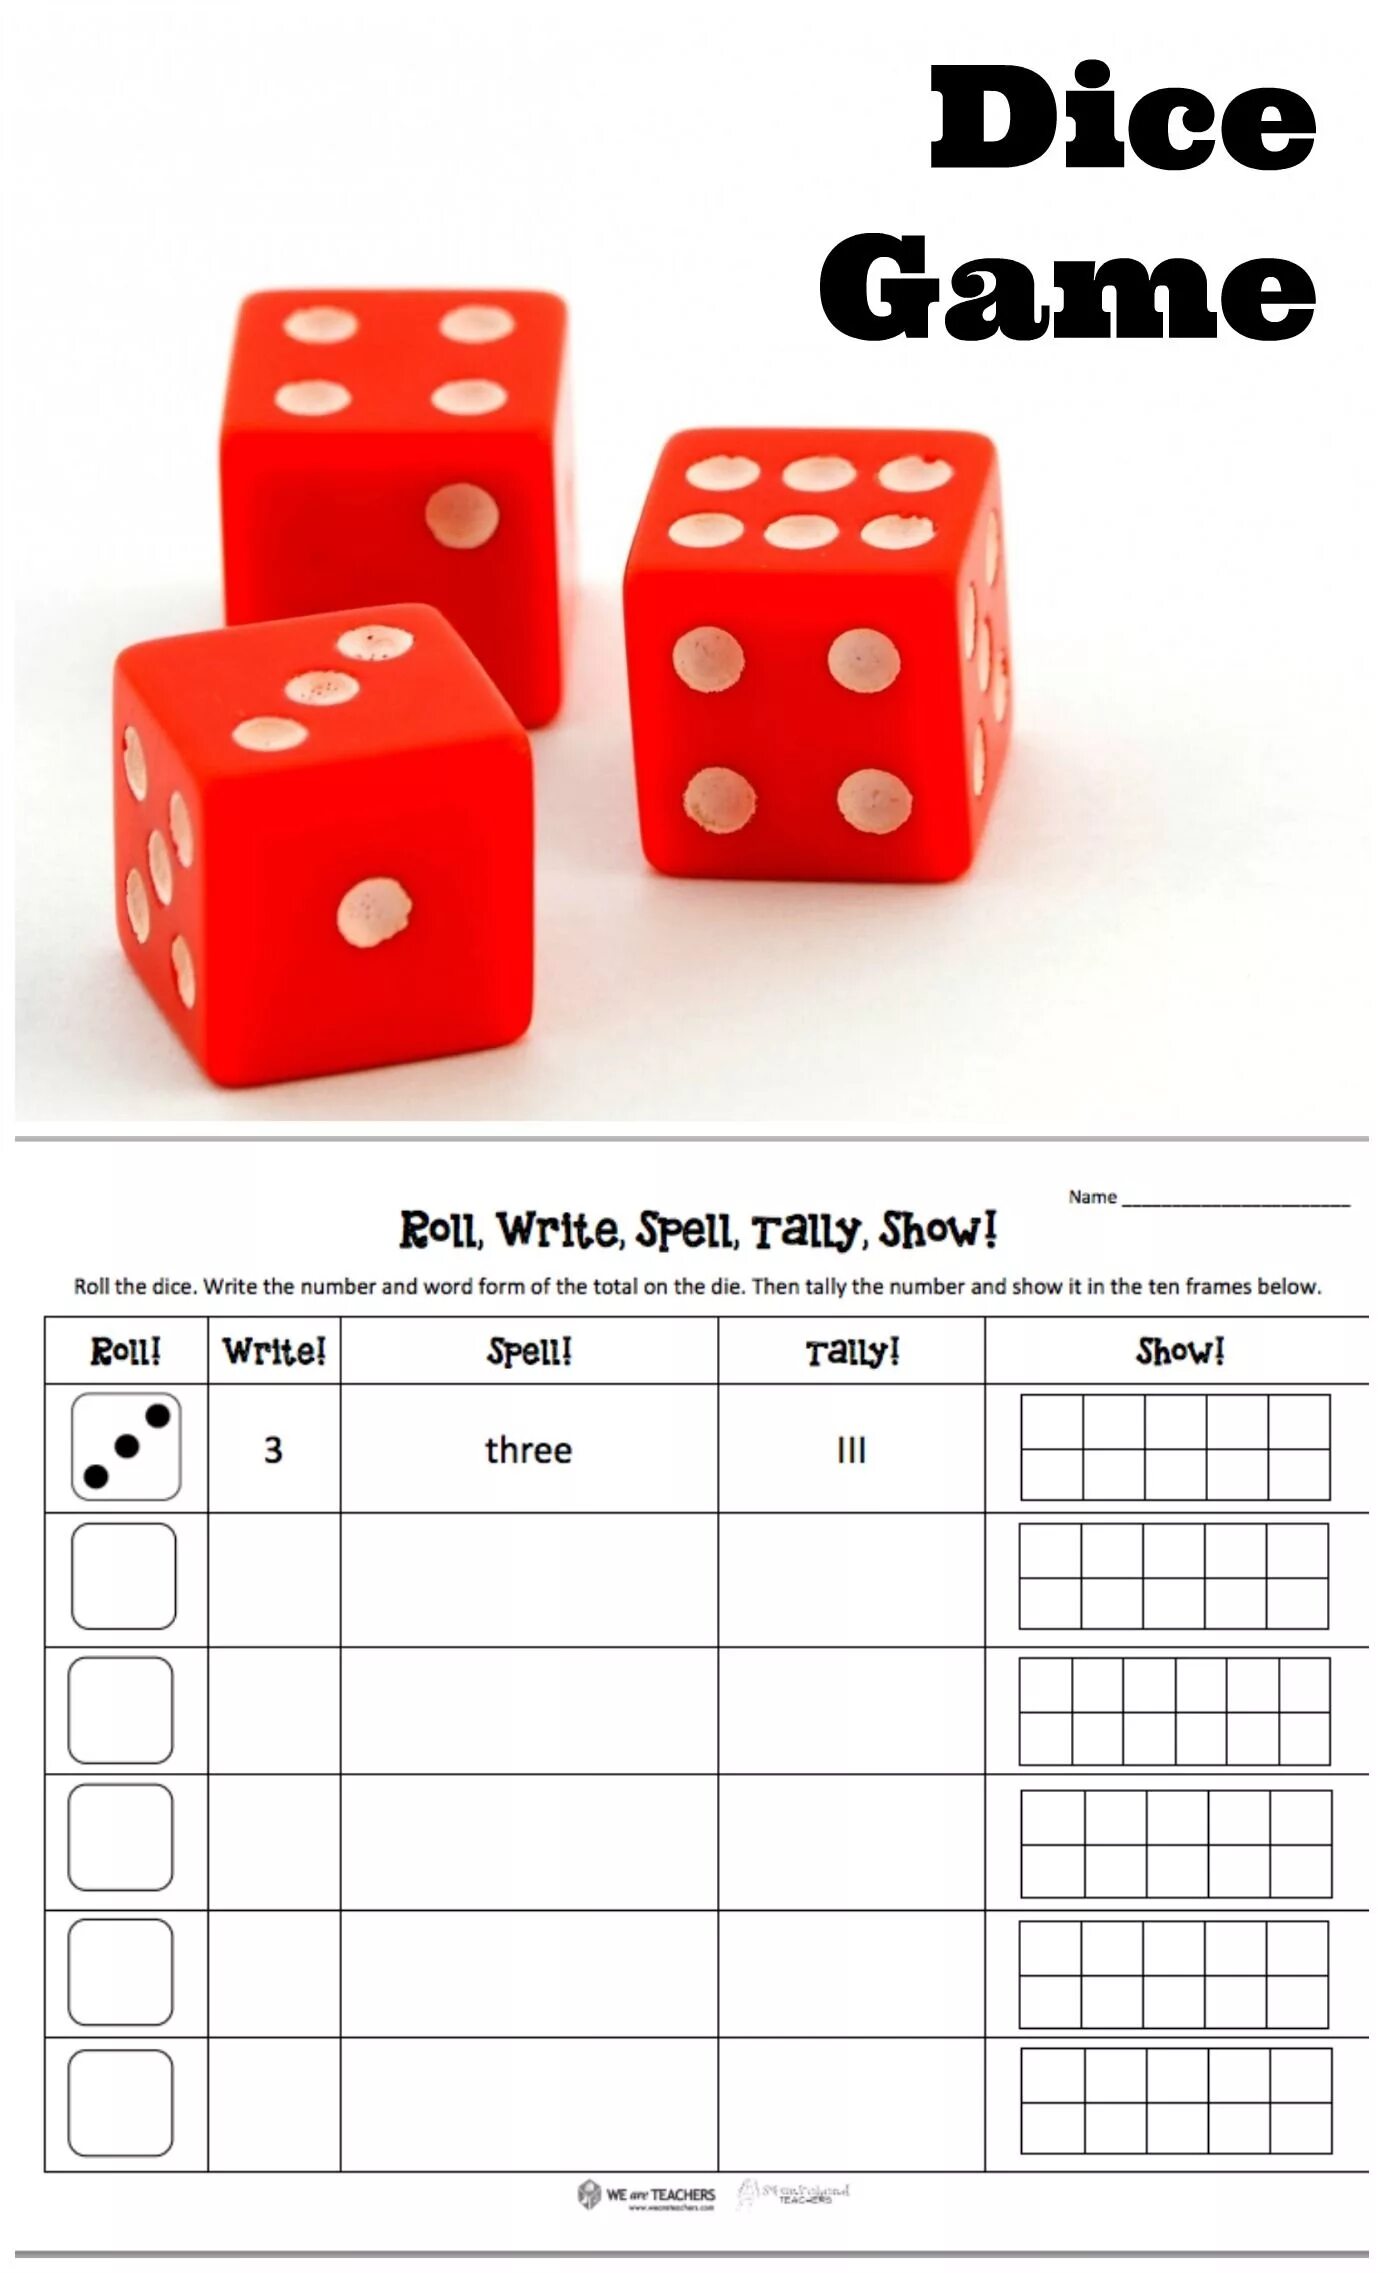 Rolling dice перевод. Dice game. Roll the dice. Roll the dice game. Roll and dice write.